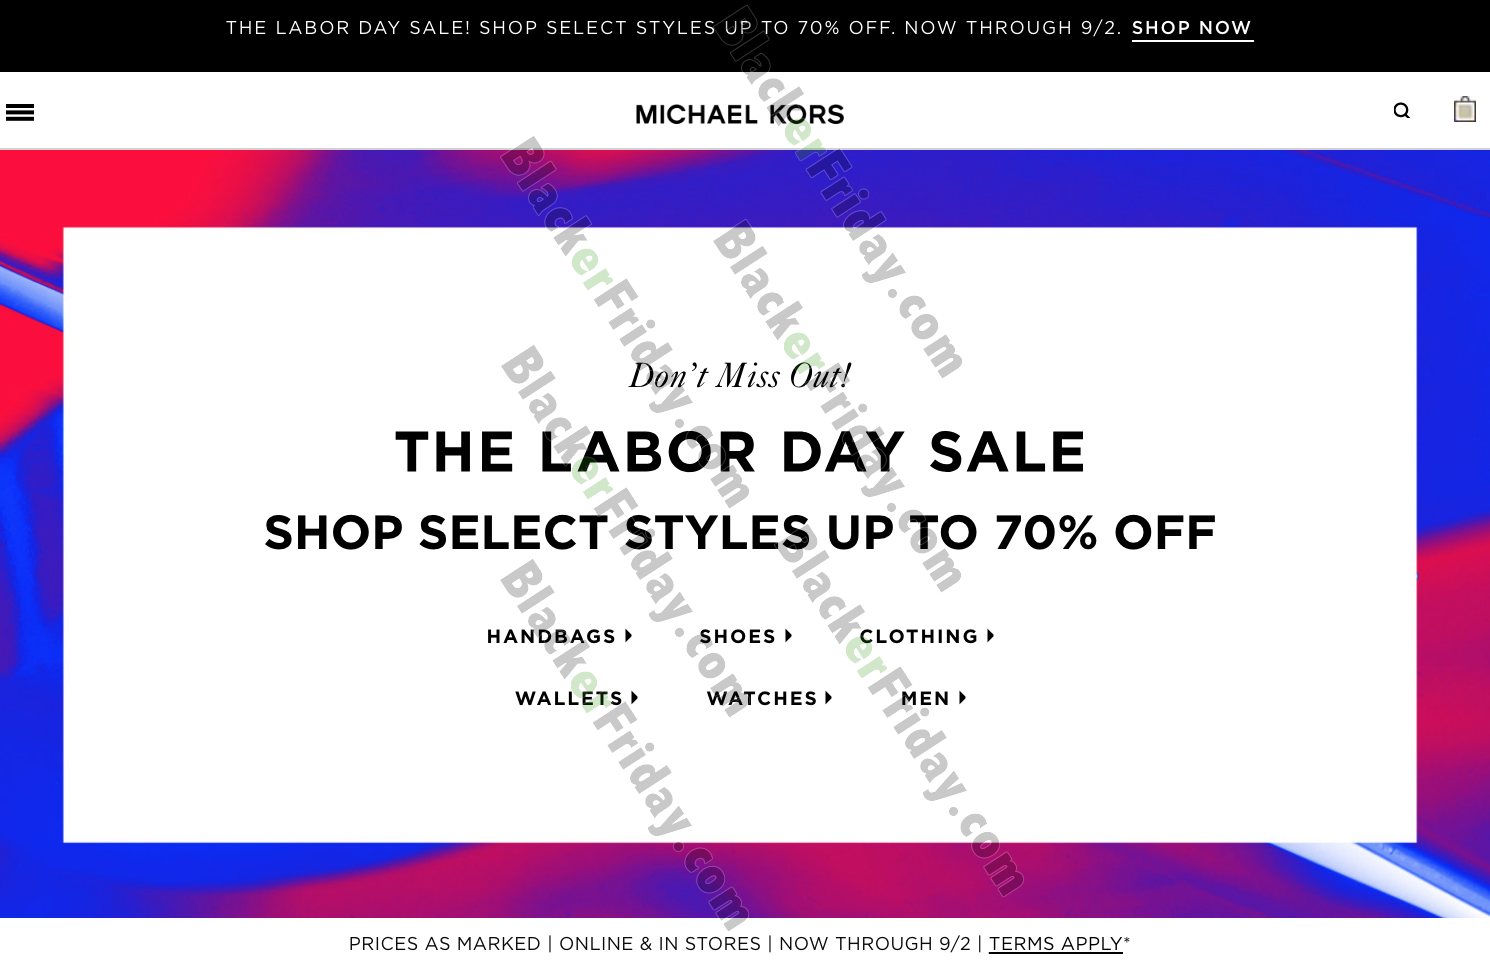 michael kors outlet labor day sale